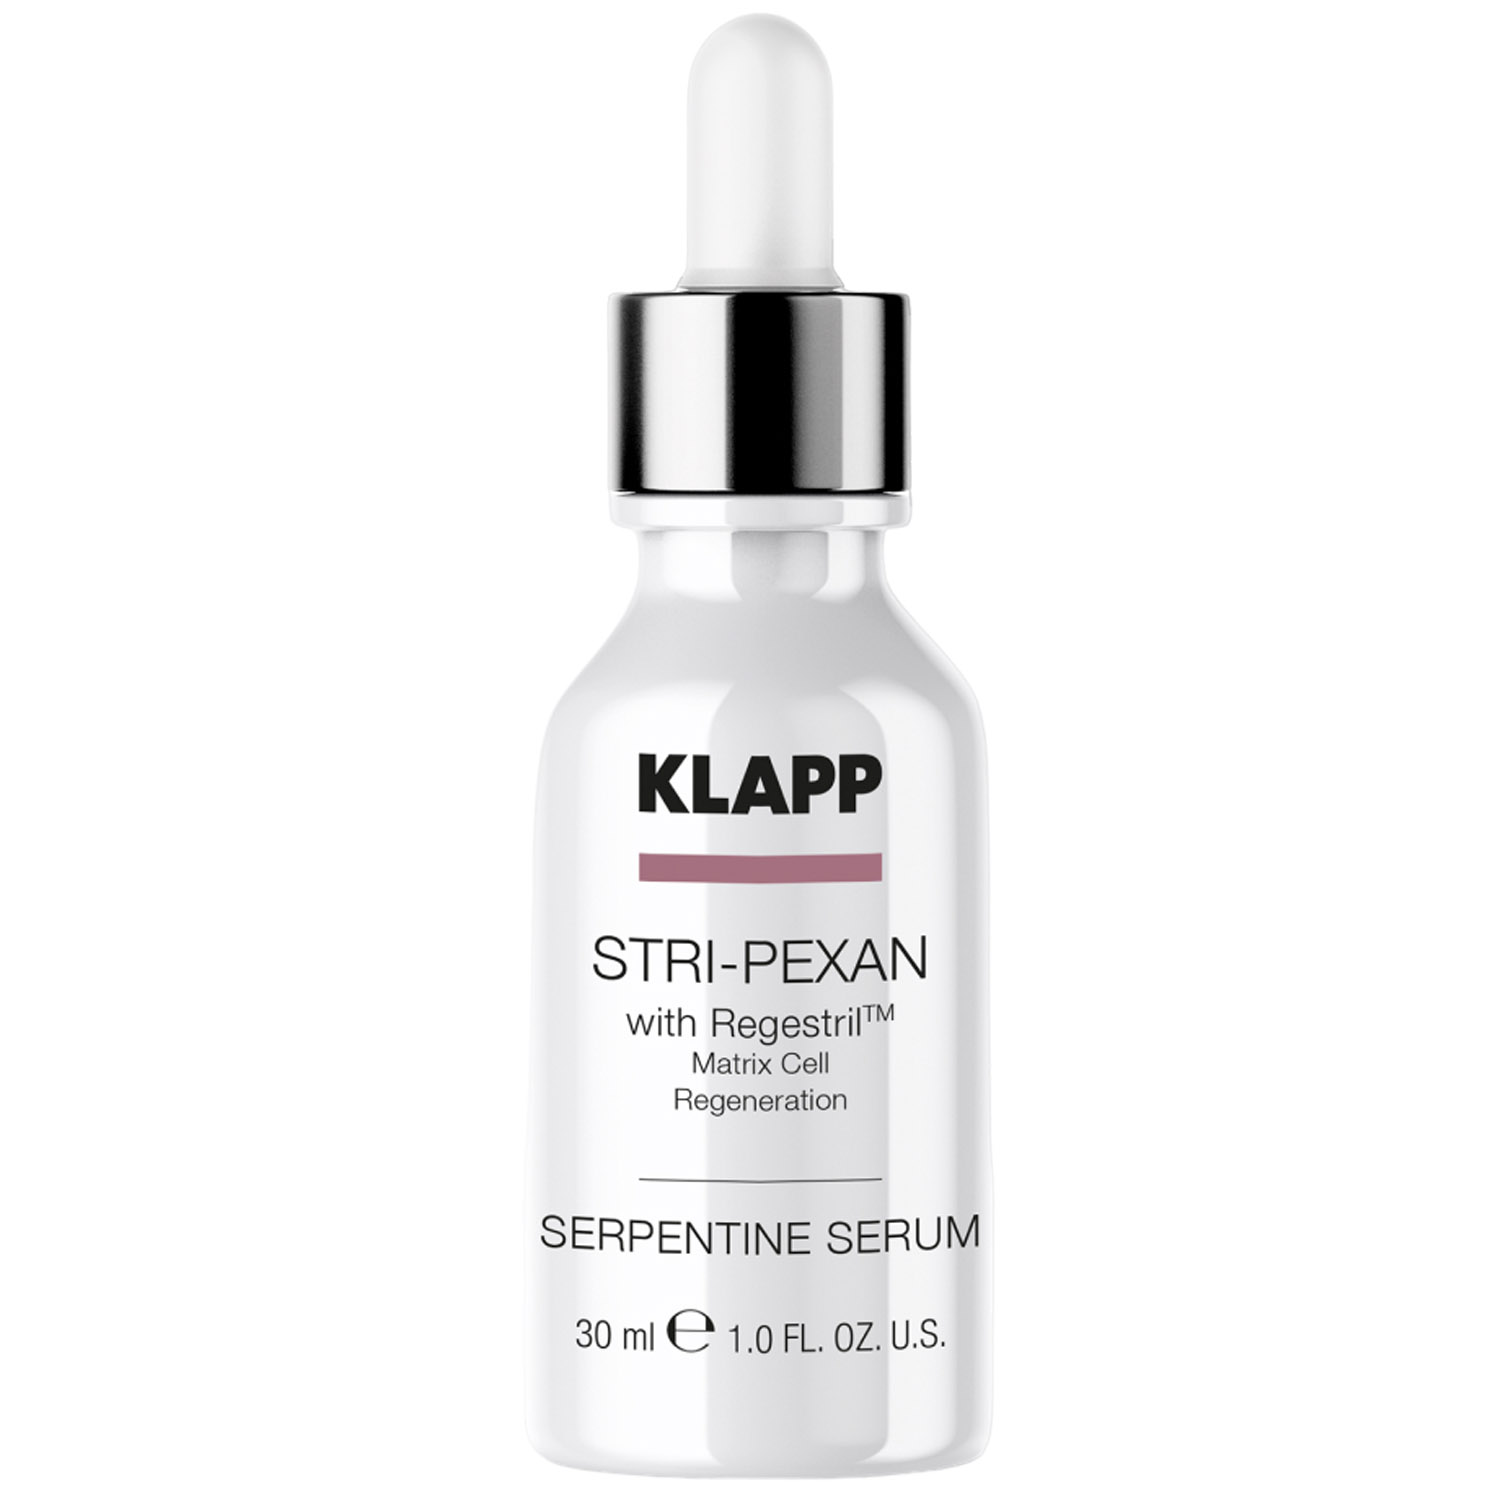 Сыворотка для лица Klapp Stri-PeXan Serpentine Serum, 30 мл - фото 1